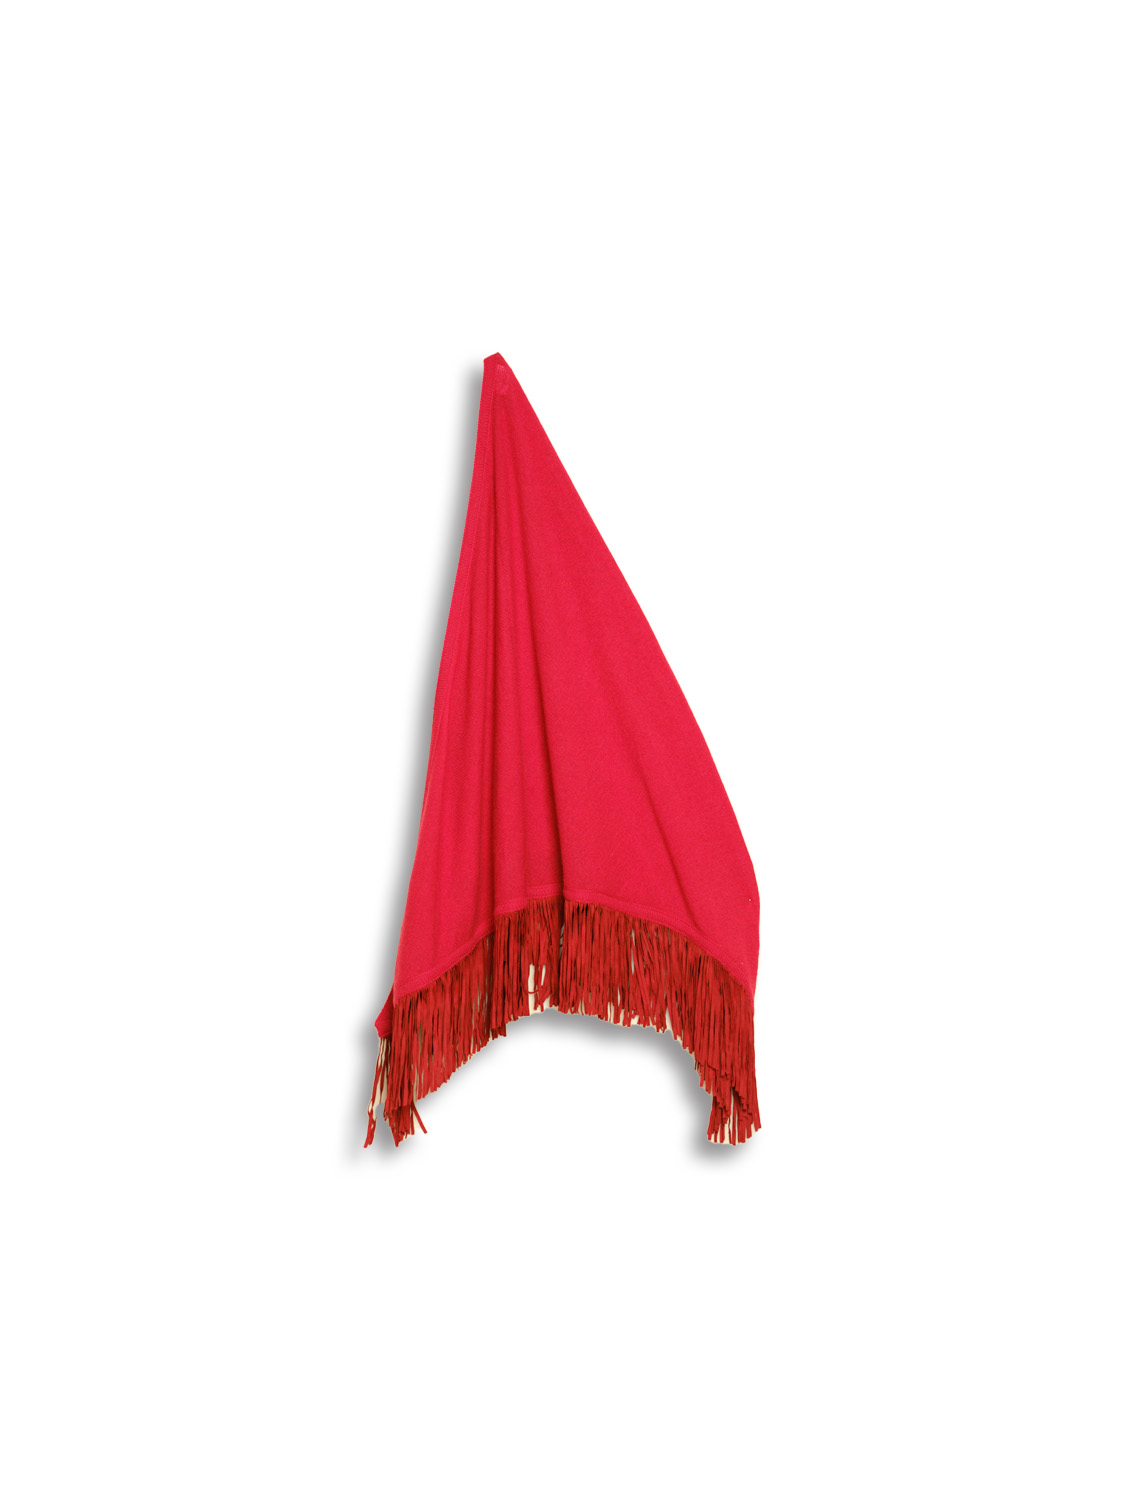 Triangolo camoscio - Triangular cape with fringes details 